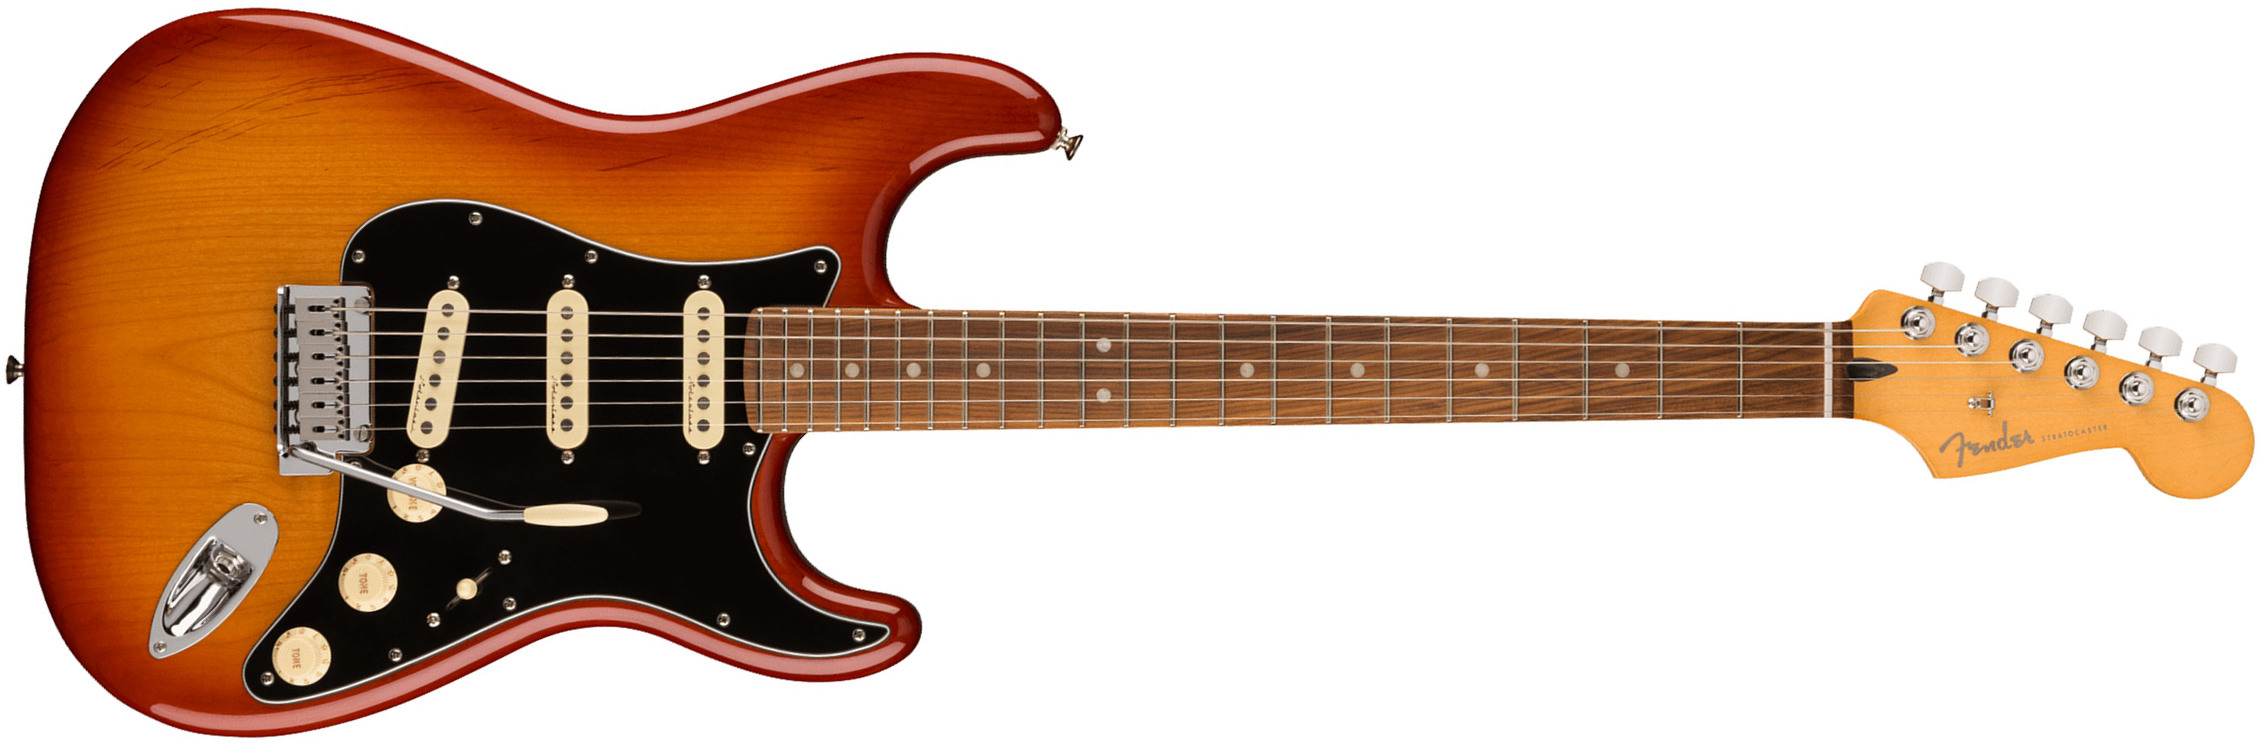 Fender Strat Player Plus Mex 2023 3s Trem Pf - Sienna Sunburst - Str shape electric guitar - Main picture